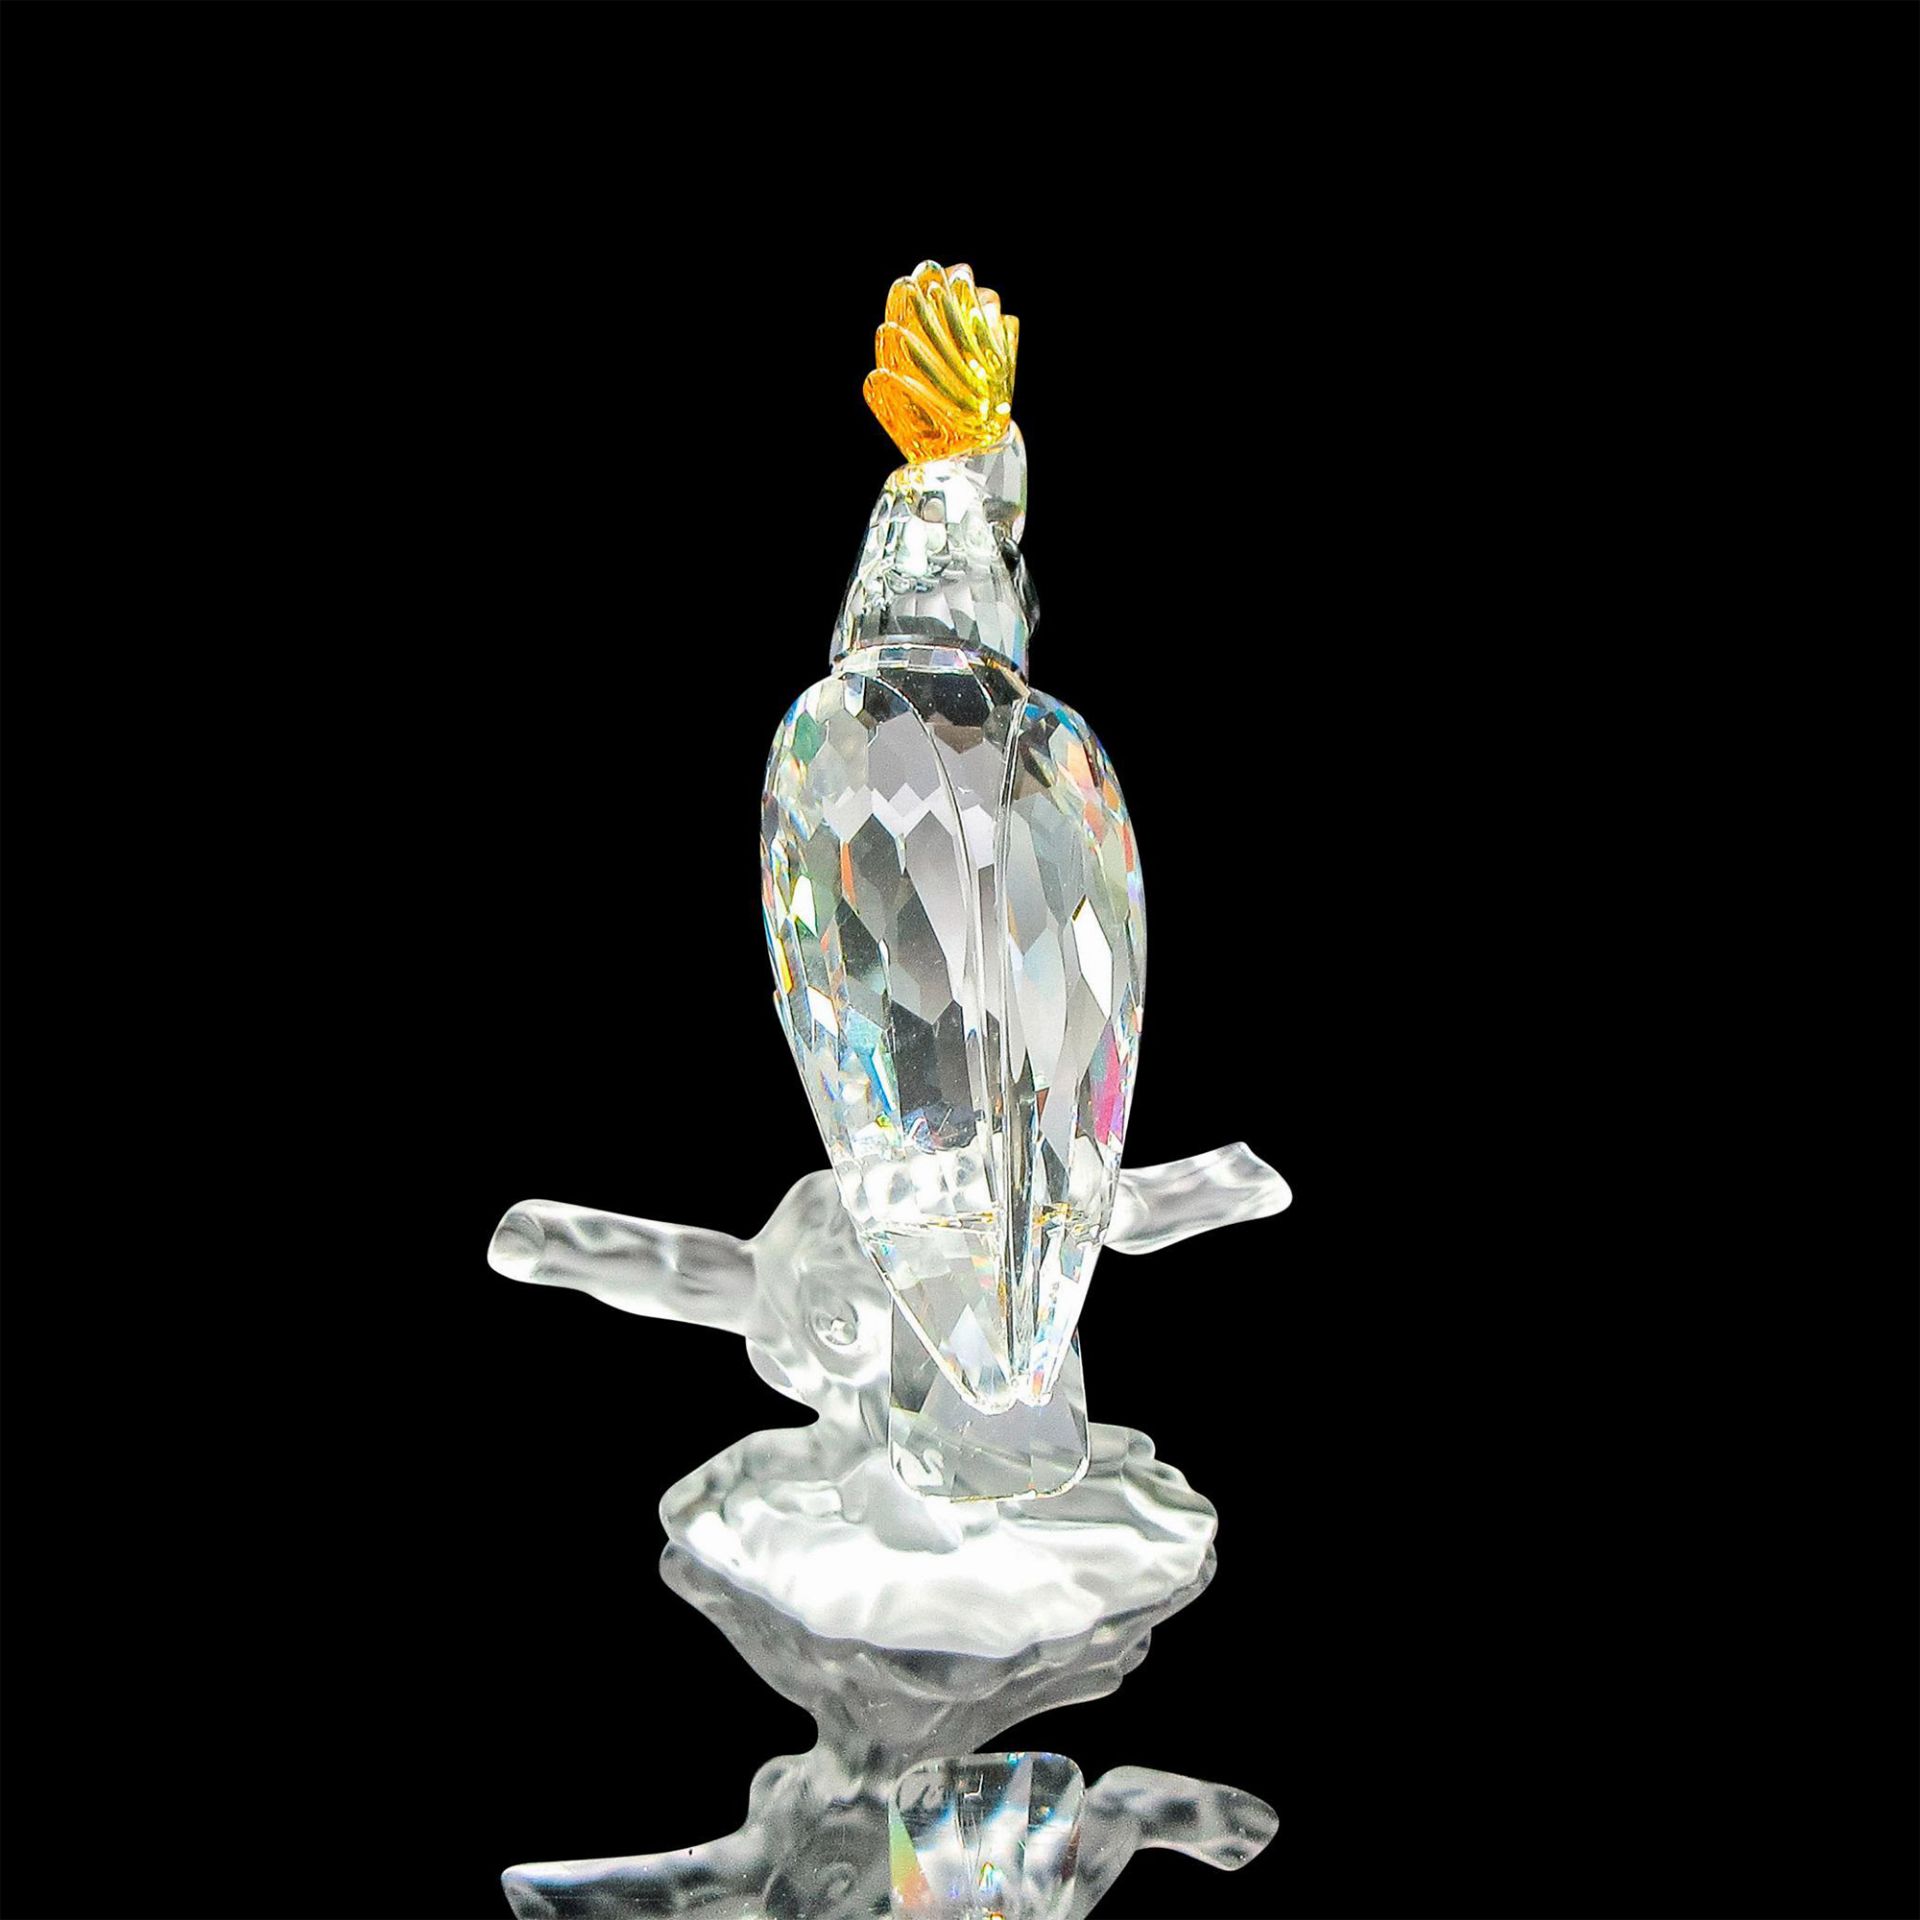 Swarovski Silver Crystal Figurine, Cockatoo - Image 2 of 3